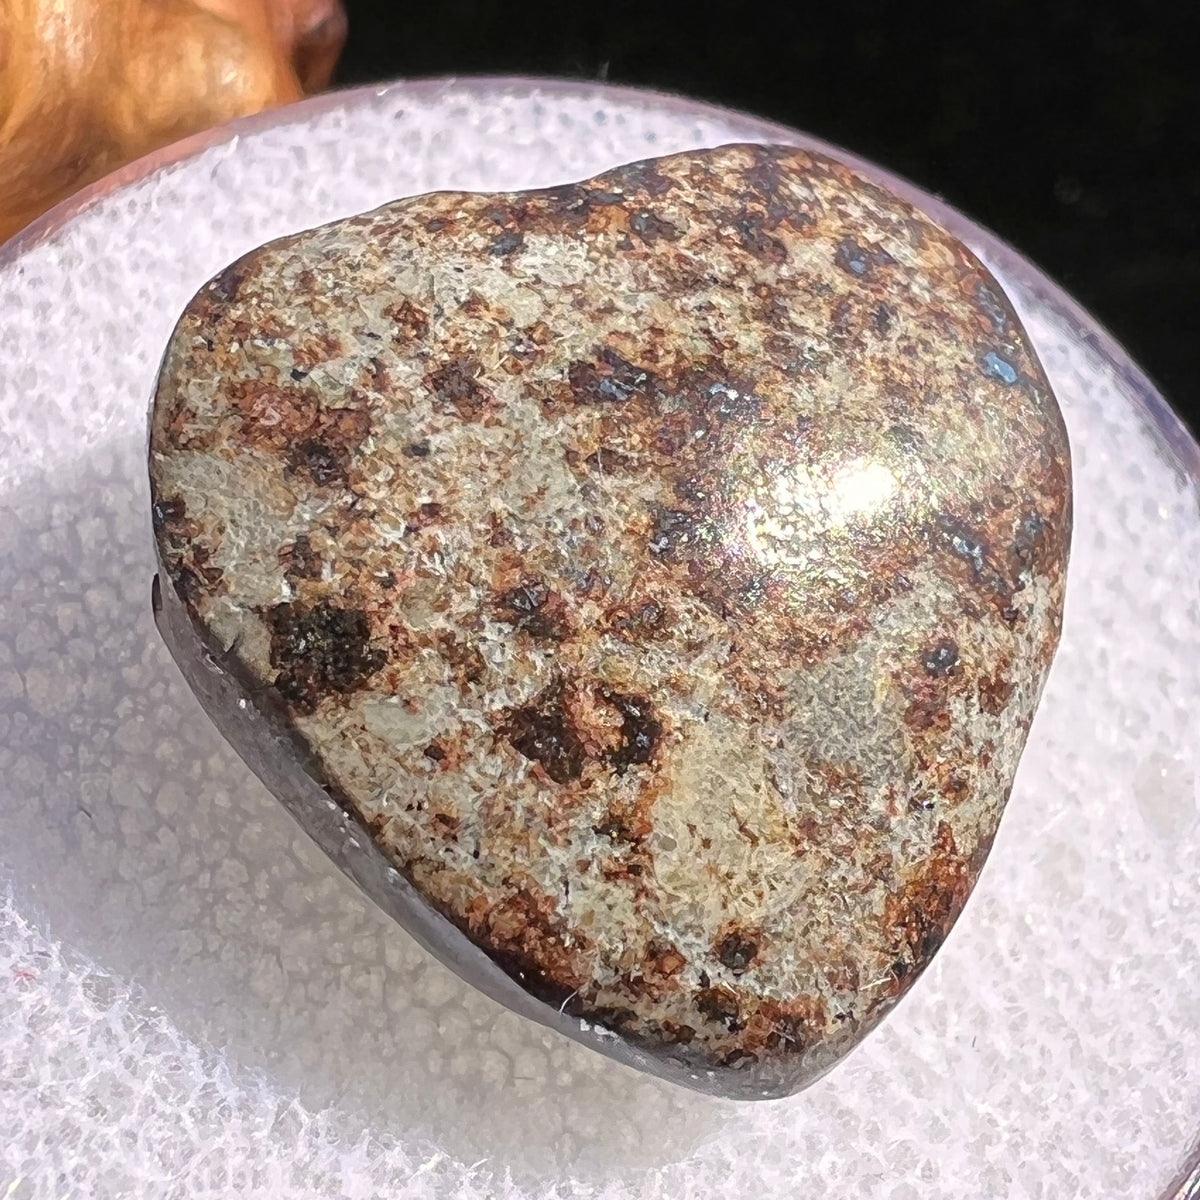 Meteorite Heart Bead for Jewelry Making #12-Moldavite Life